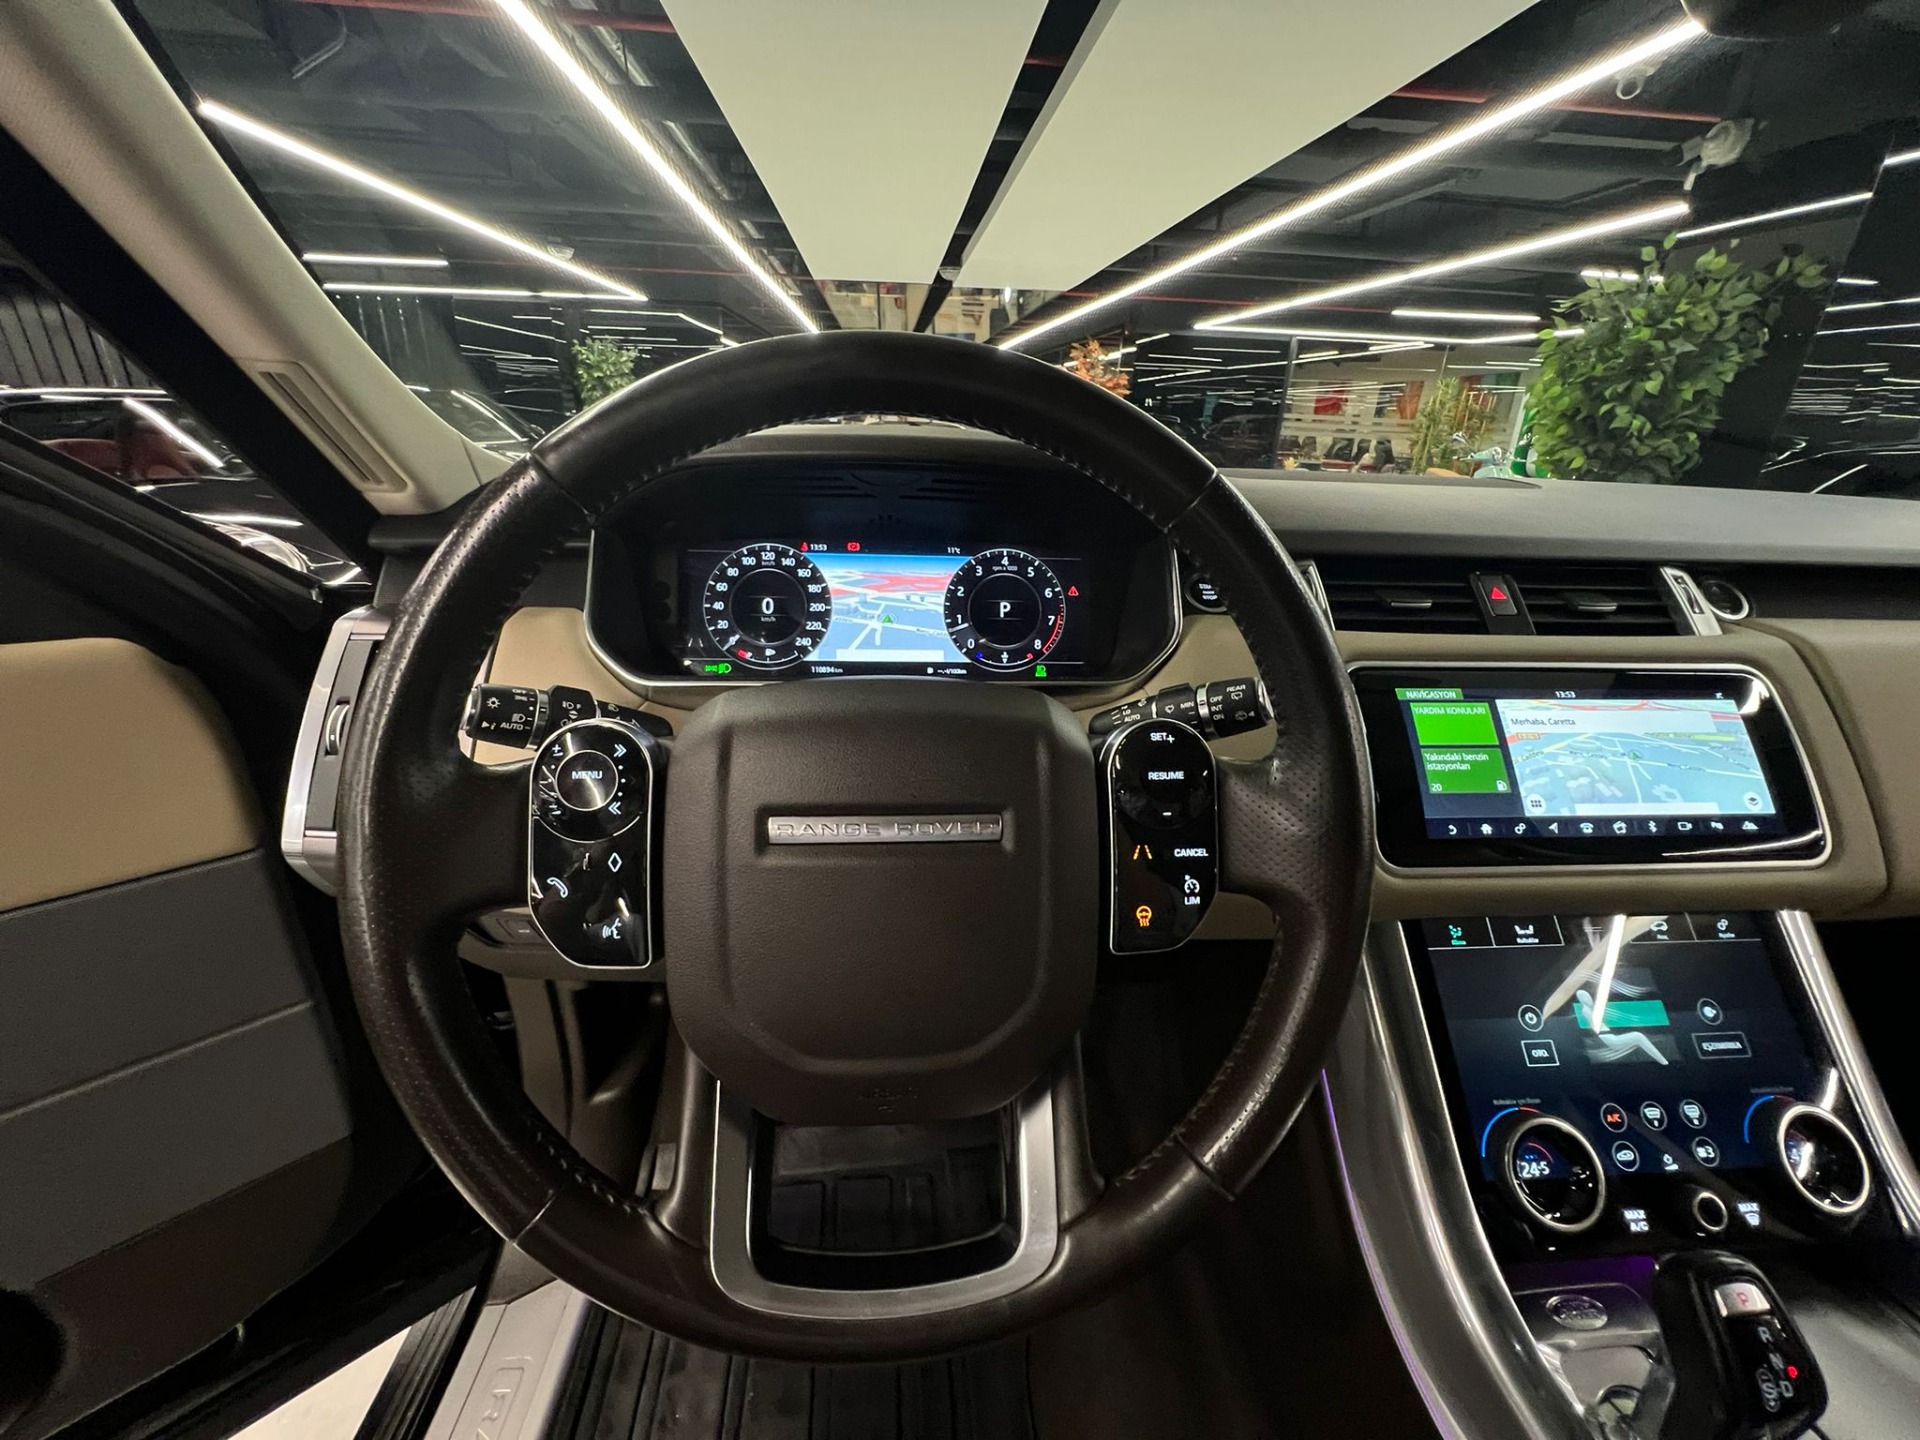 2019 Model Range Rover Sport 2.0 HSE Plus-15